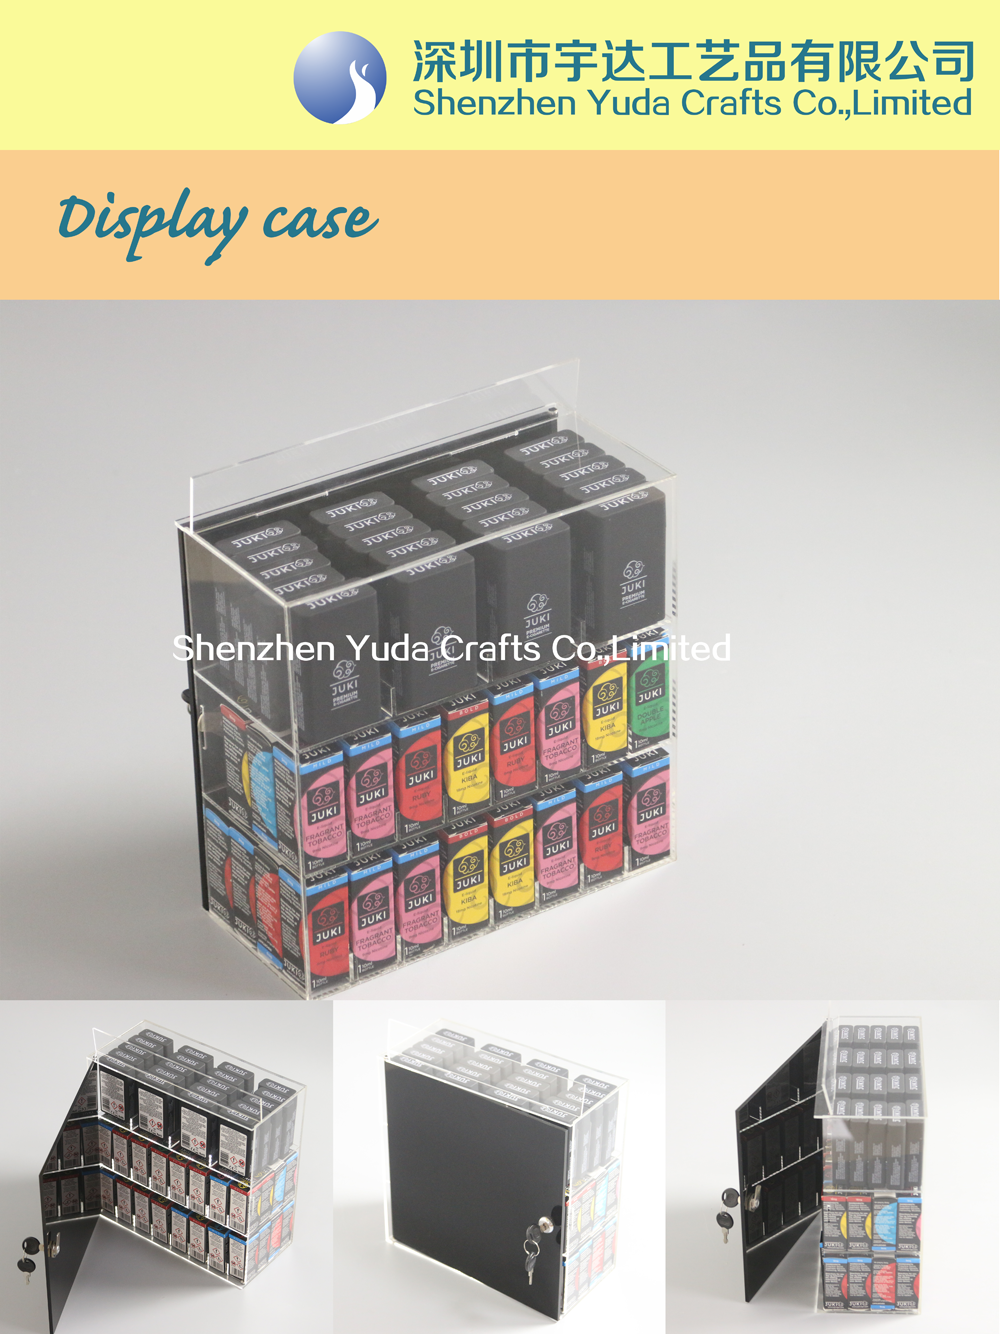 custom small acrylic display e-juice tester display ejuice shelve